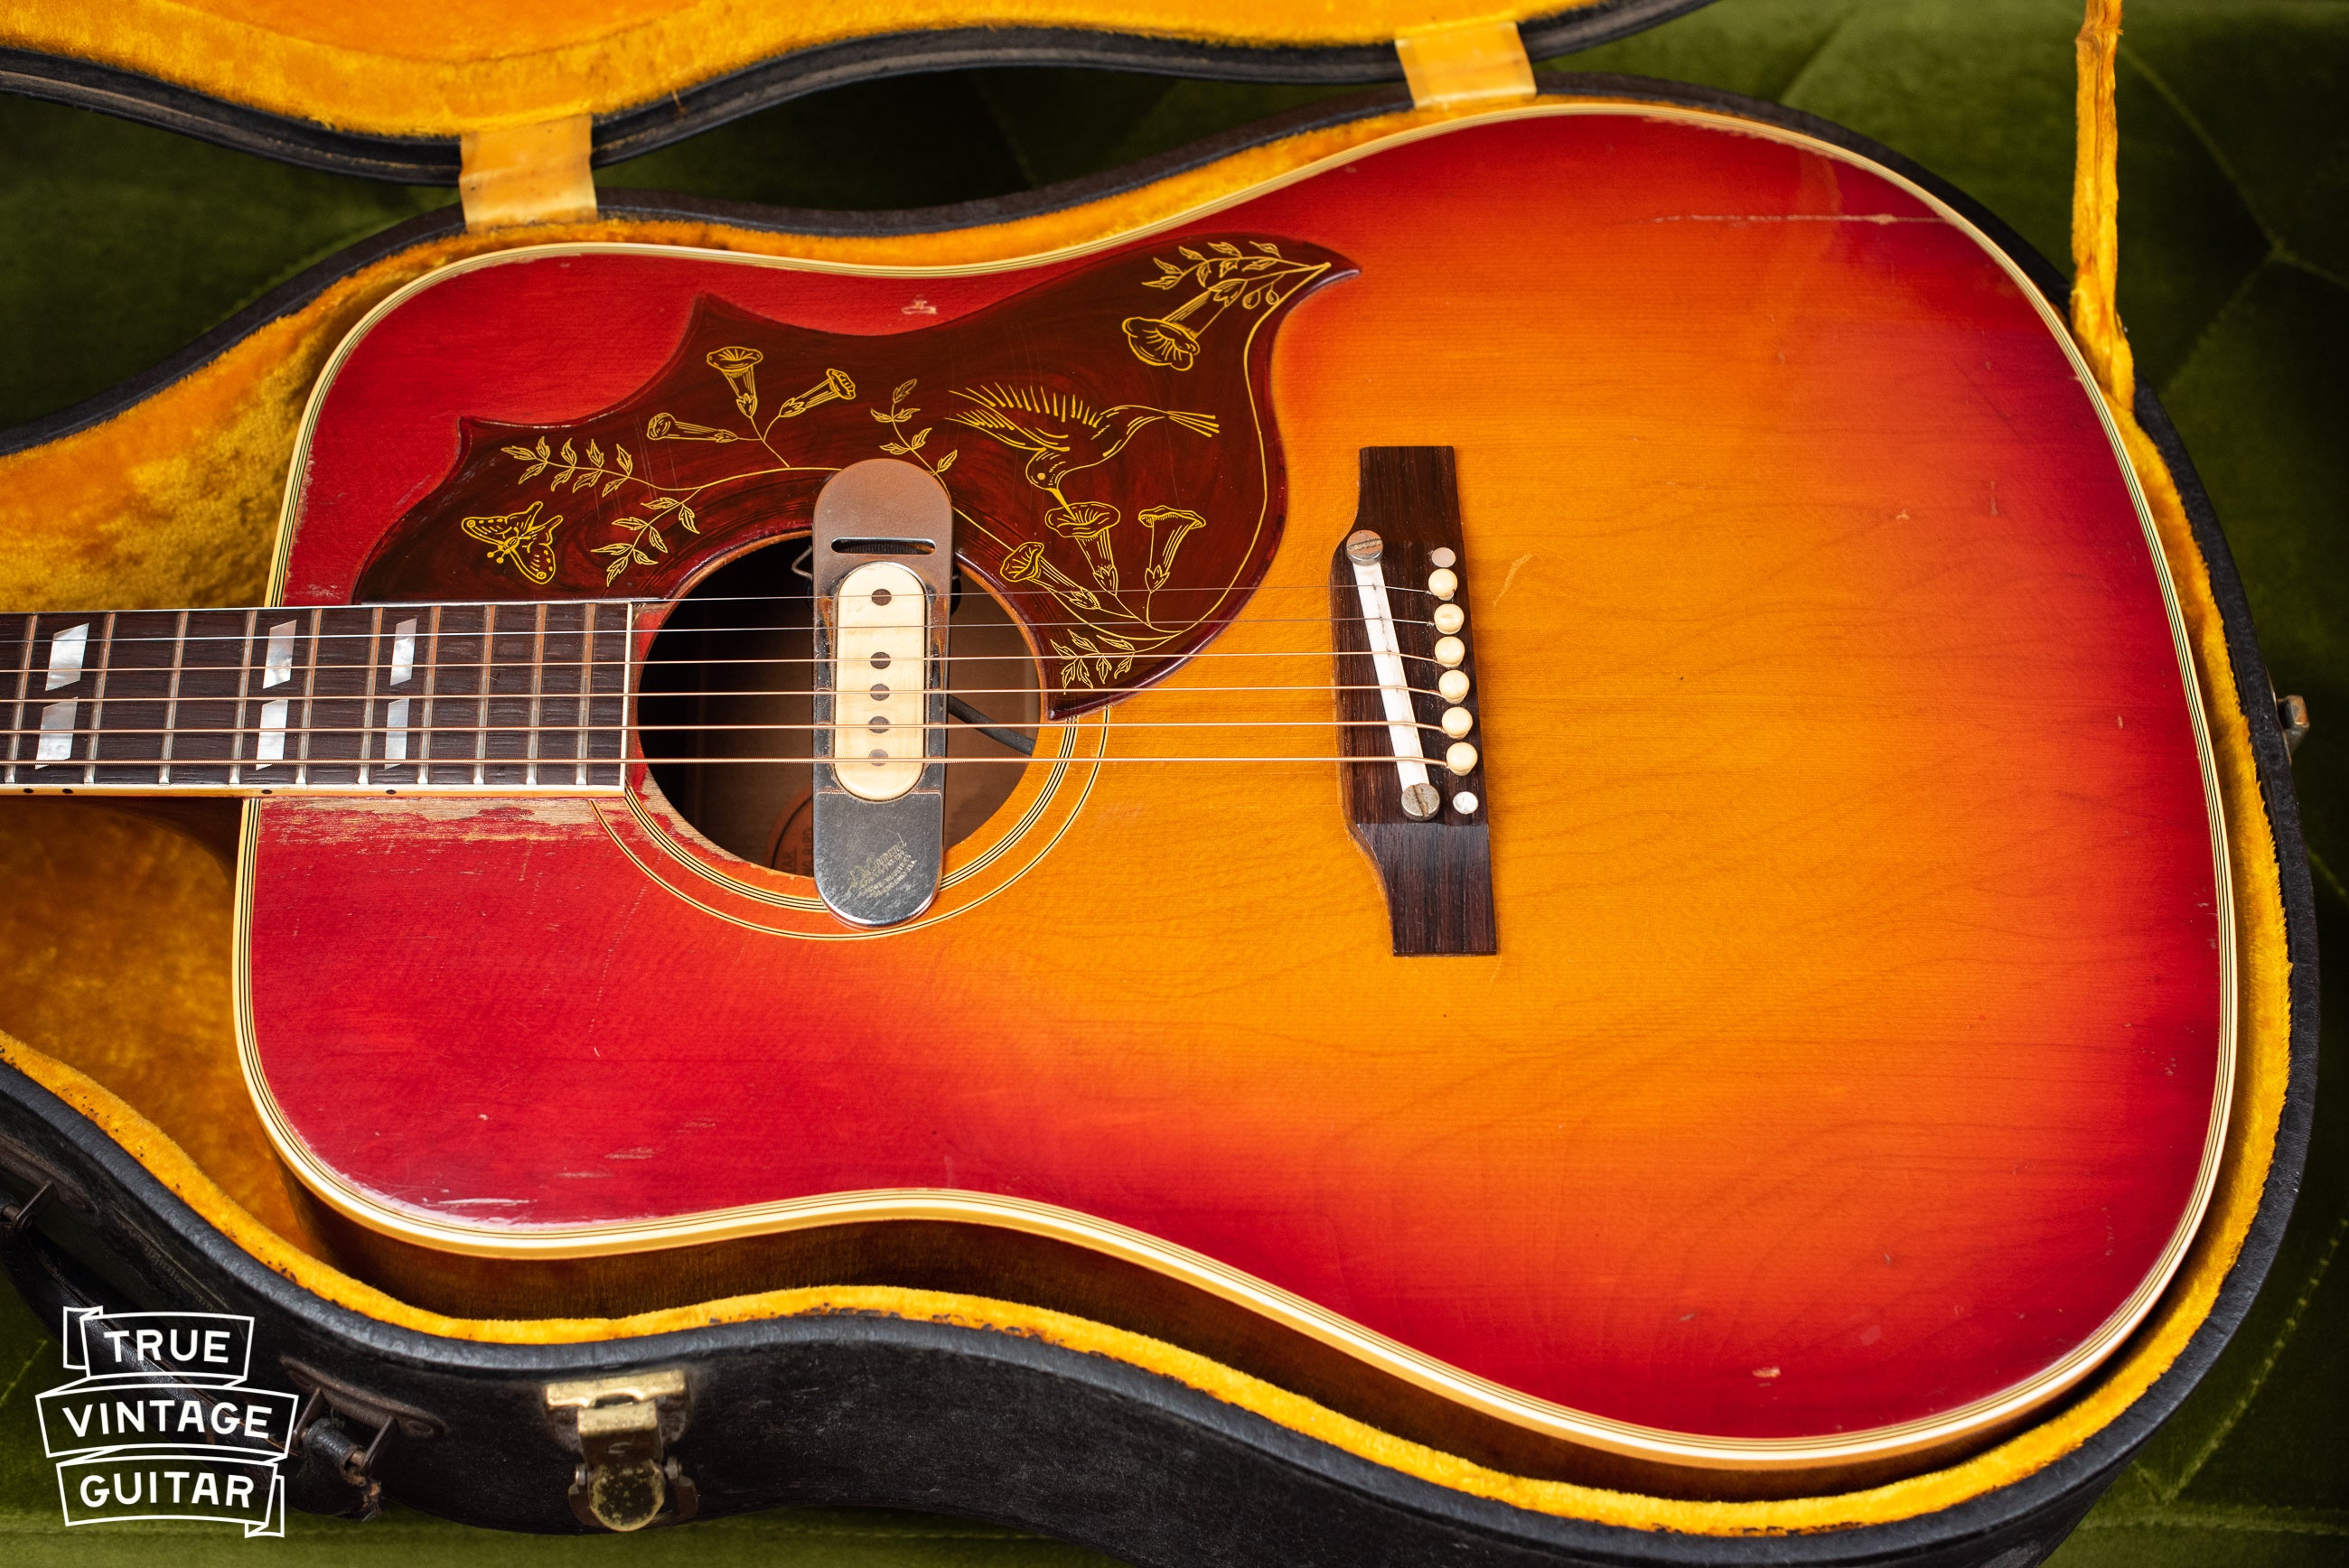 Vintage 1963 Gibson Hummingbird acoustic guitar